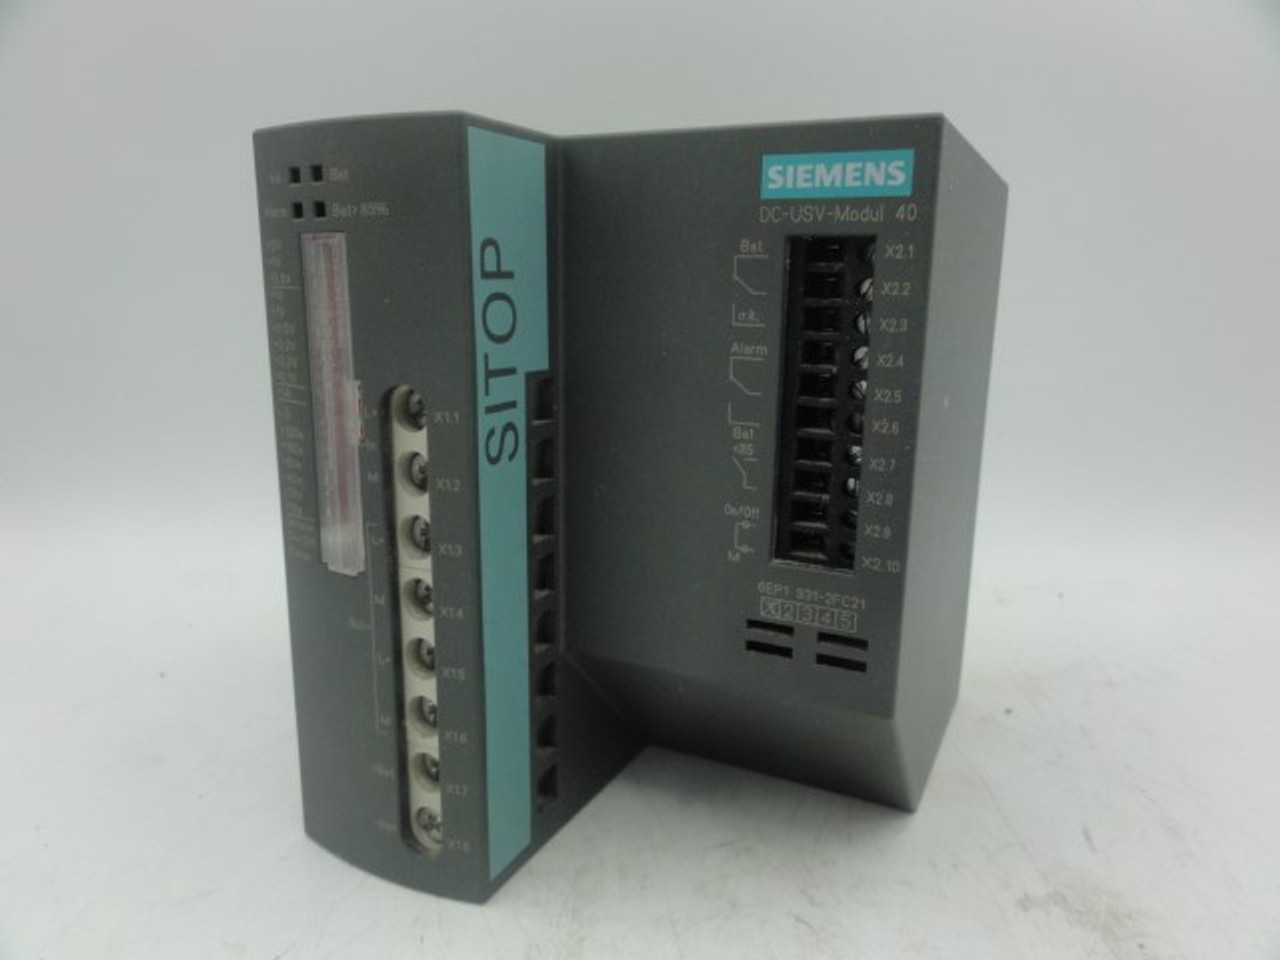 Siemens DC-USV-Modul 40 6EPI 931-2FC21 Power Supply